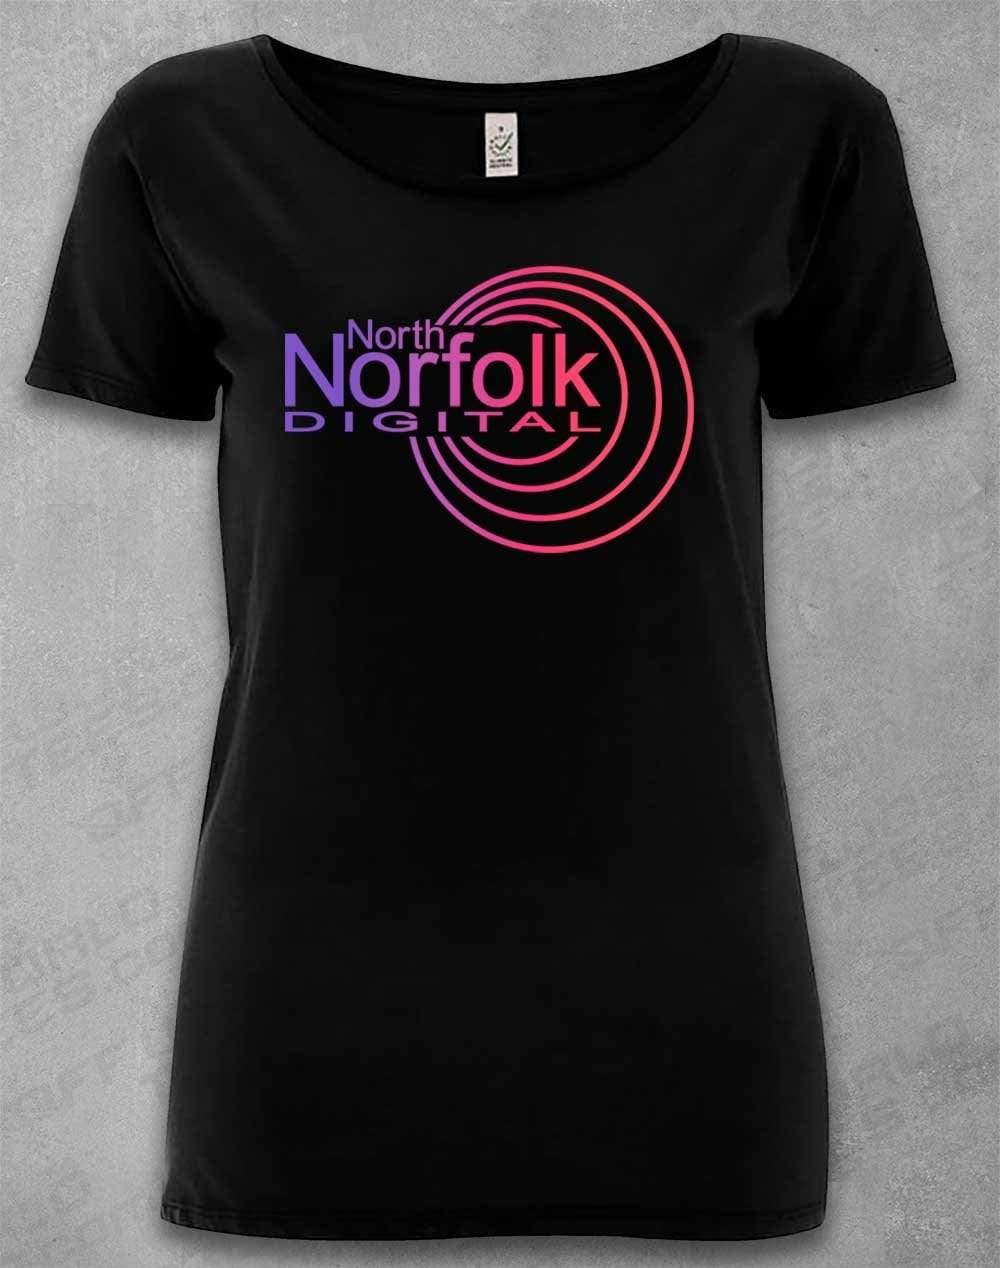 DELUXE North Norfolk Digital Organic Scoop Neck T-Shirt 8-10 / Black  - Off World Tees